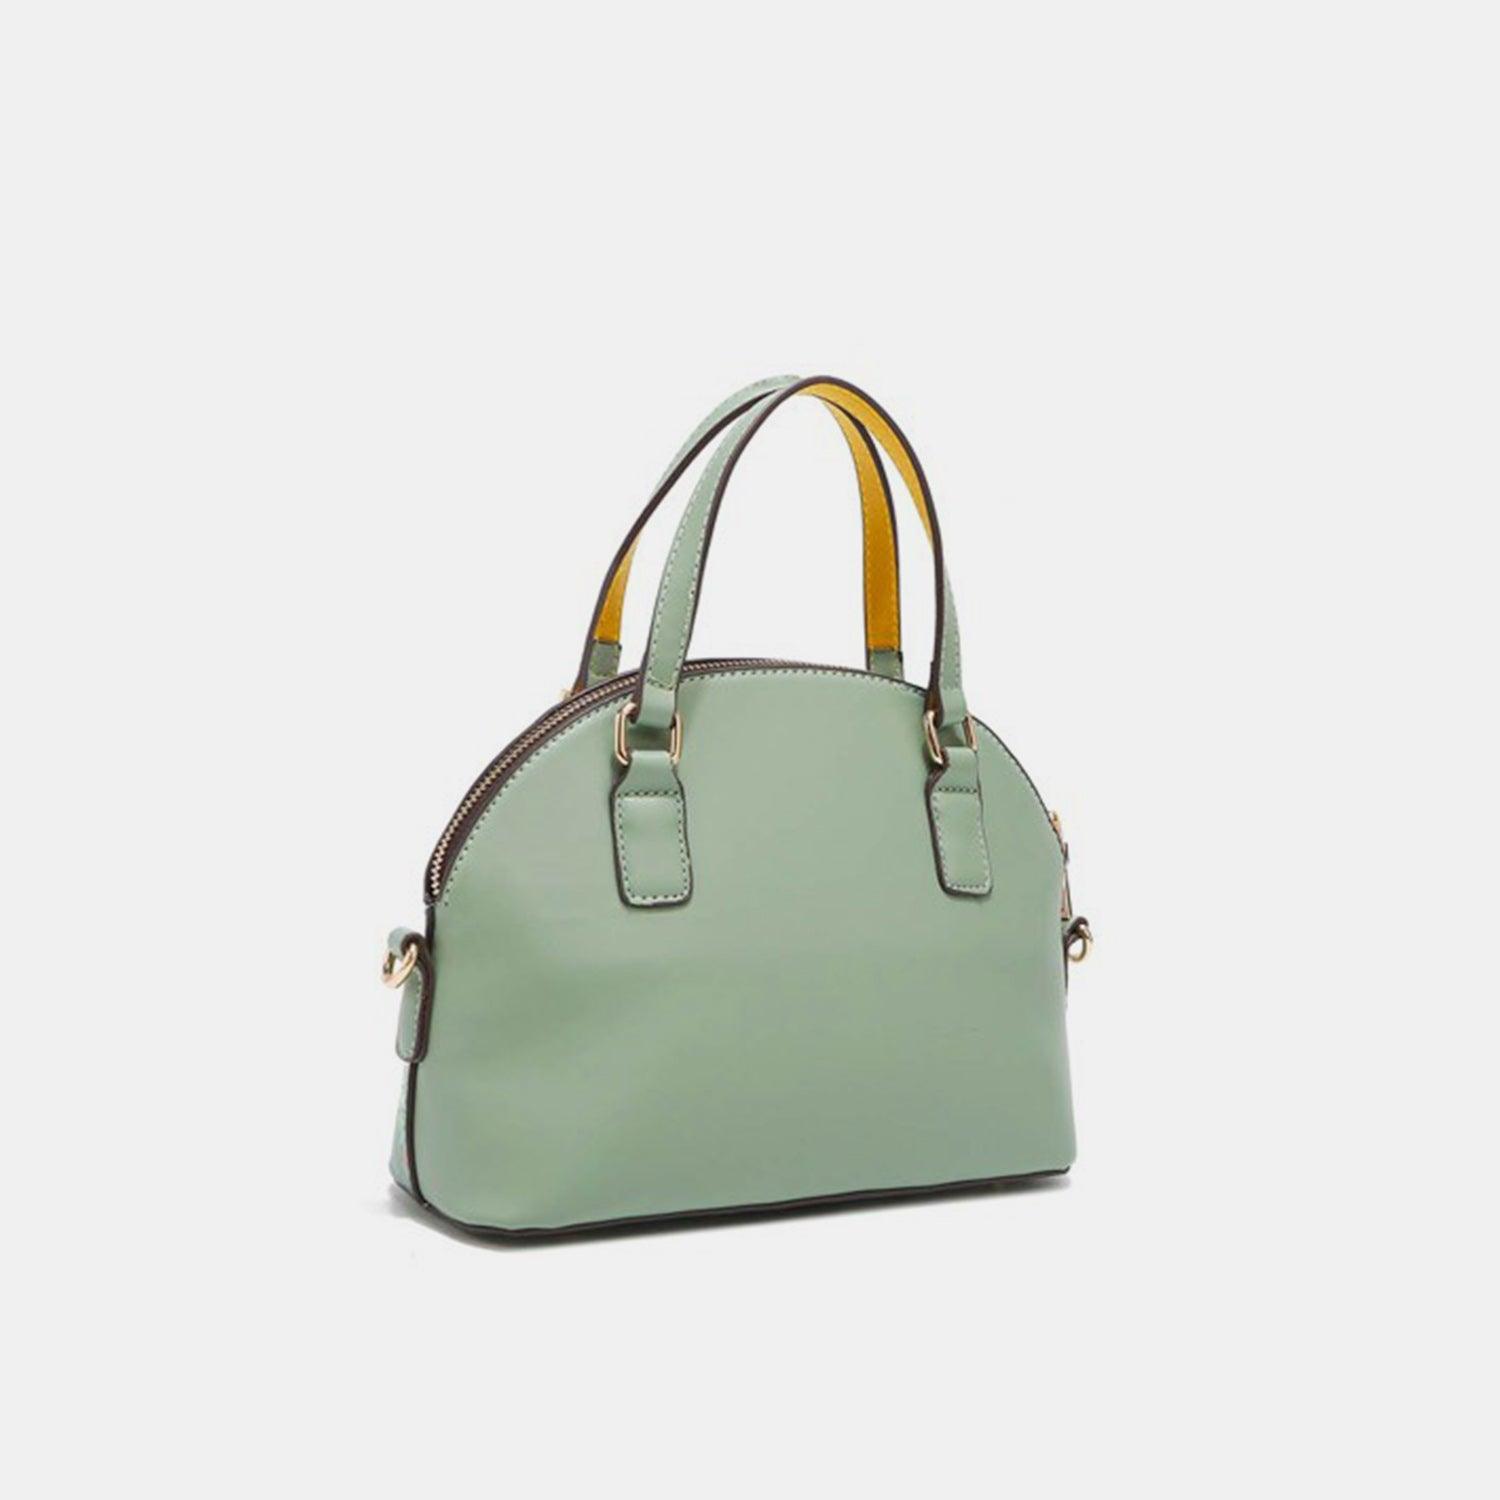 a green handbag with a yellow handle